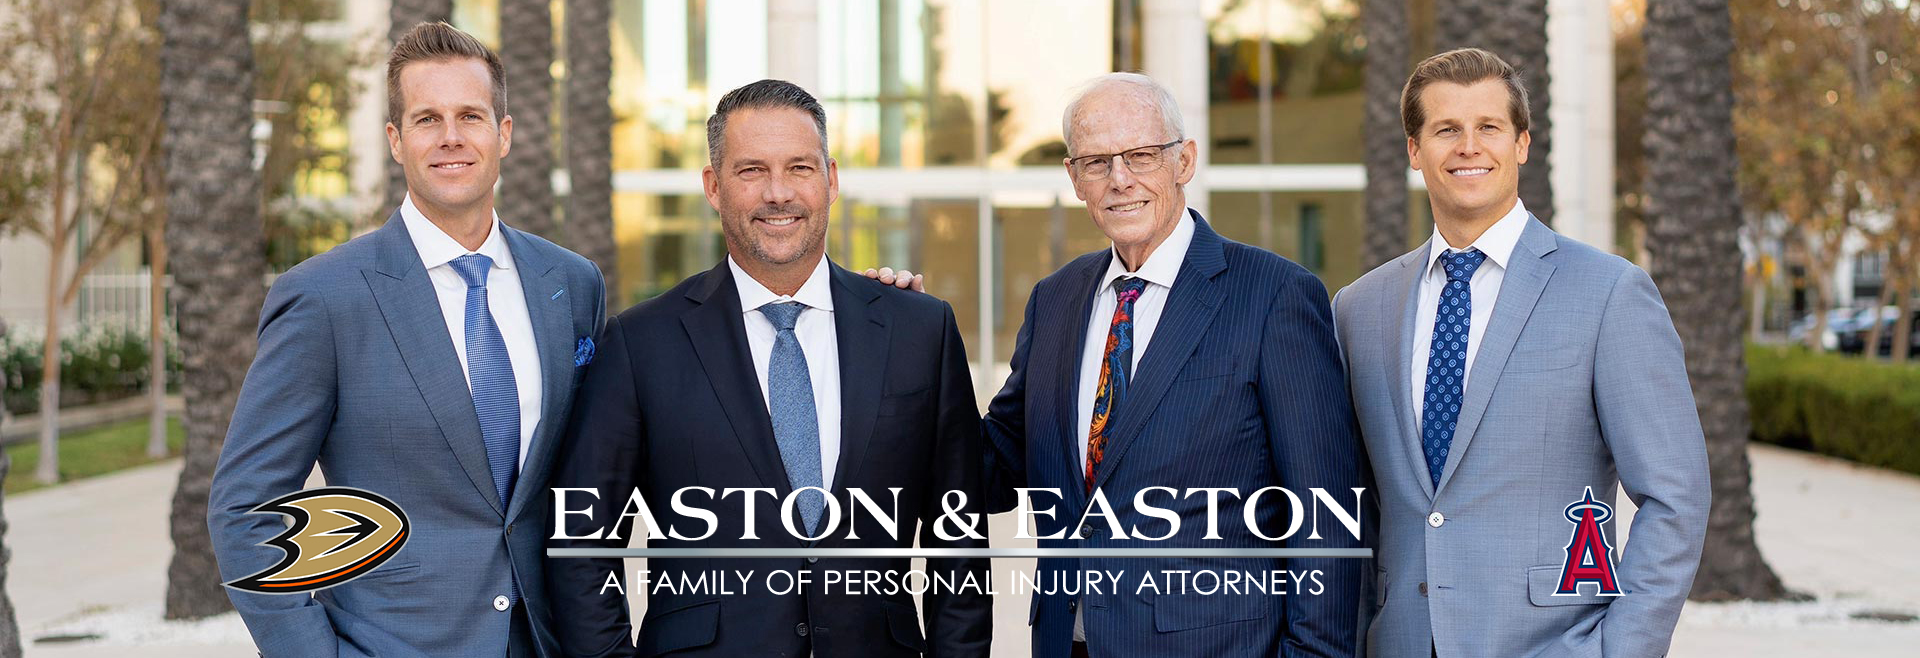 Easton Easton a Family of Personal Injury Attorneys